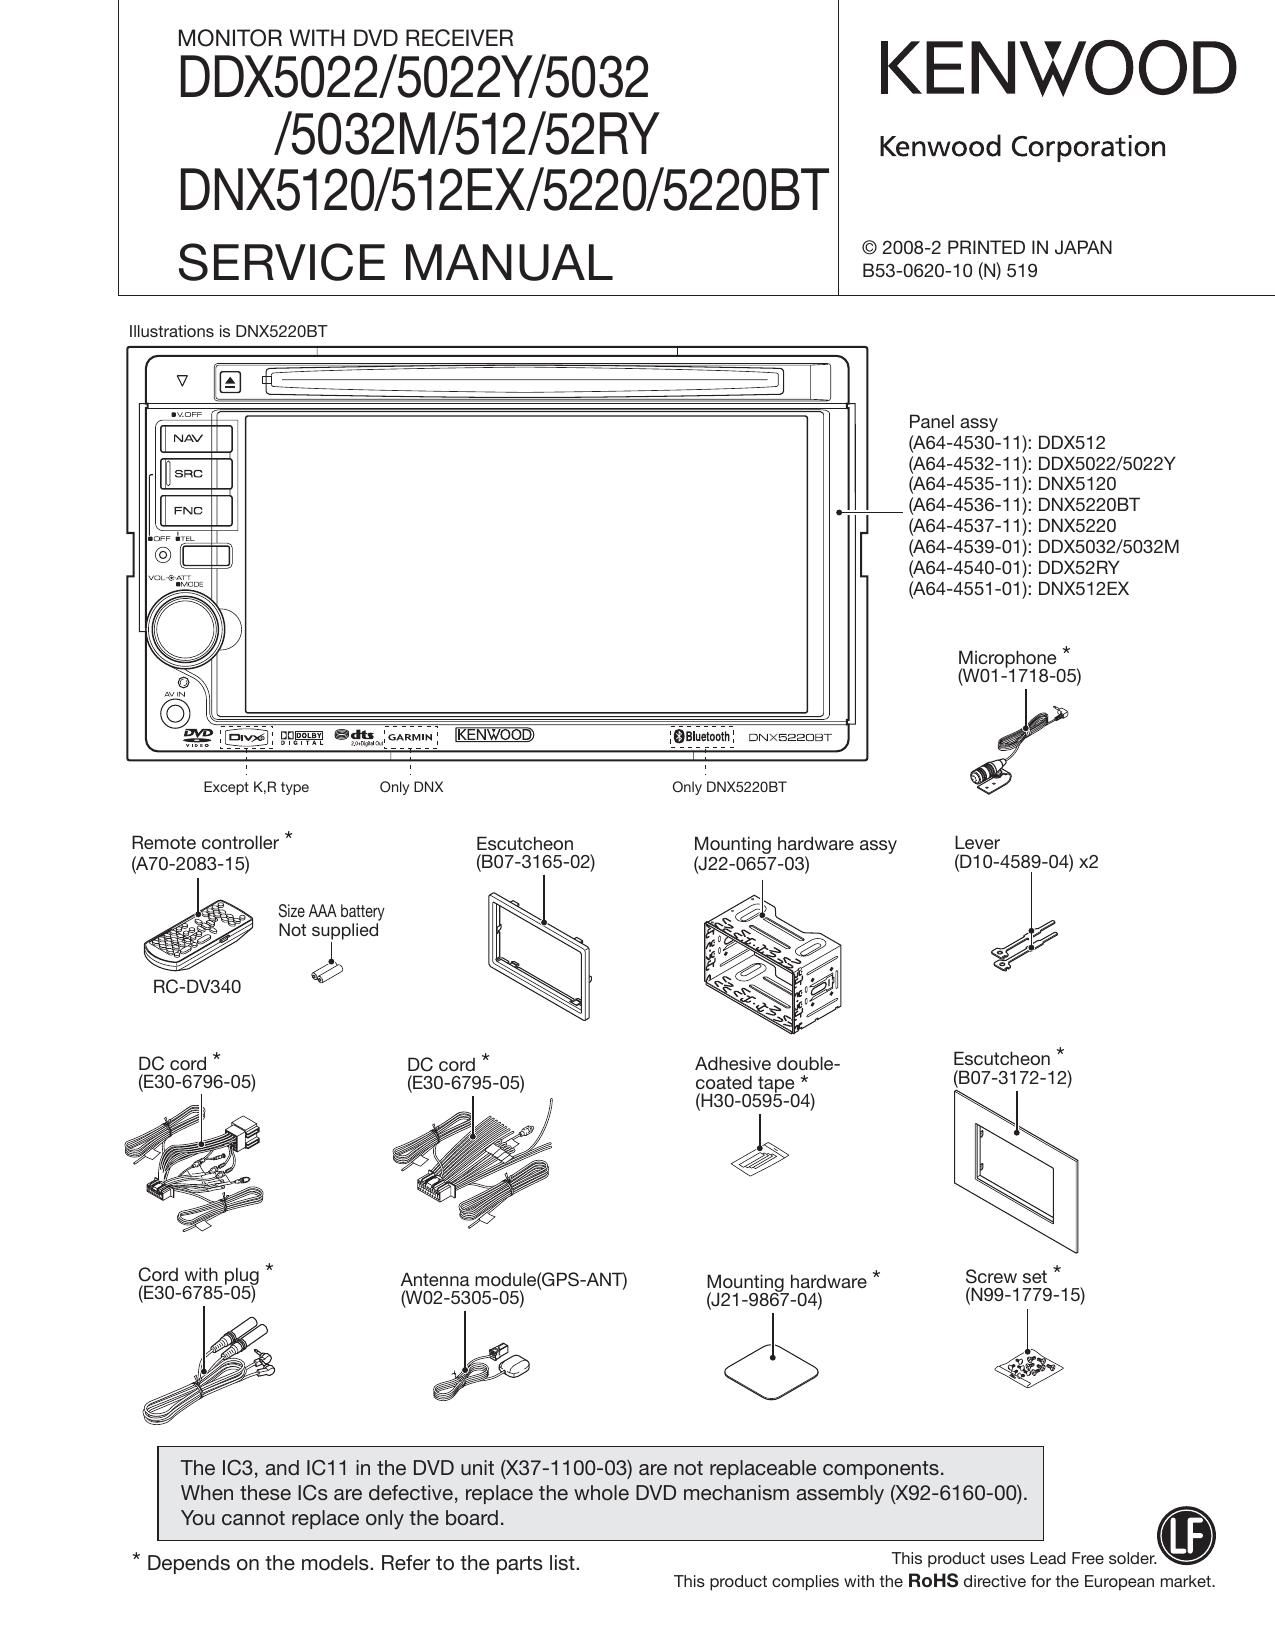 Kenwood DNX 5220 Service Manual